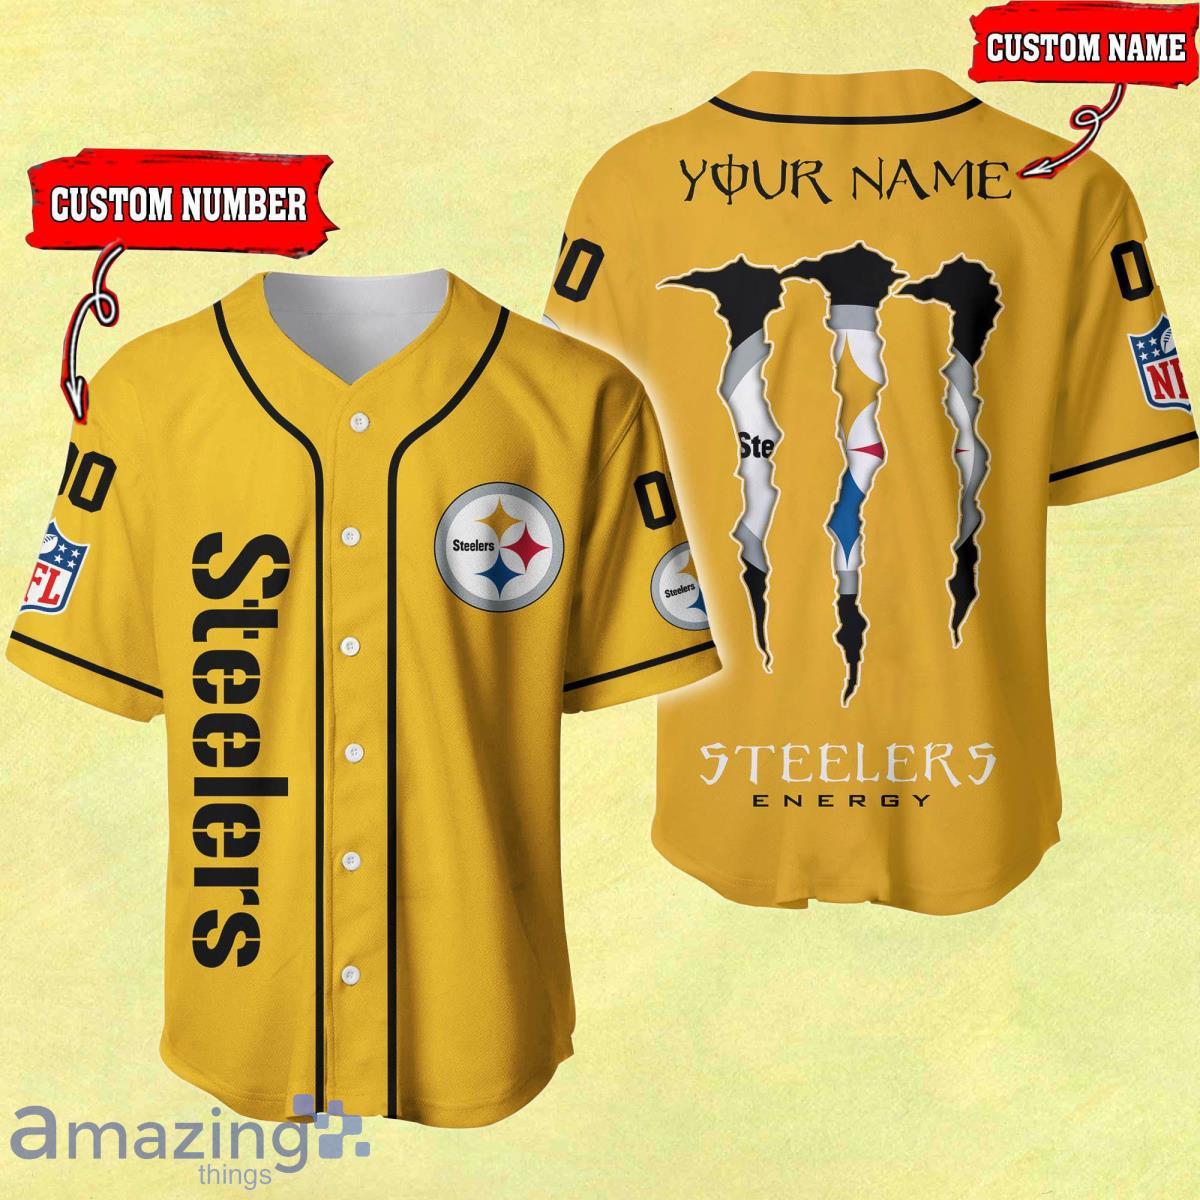 steelers baseball shirt